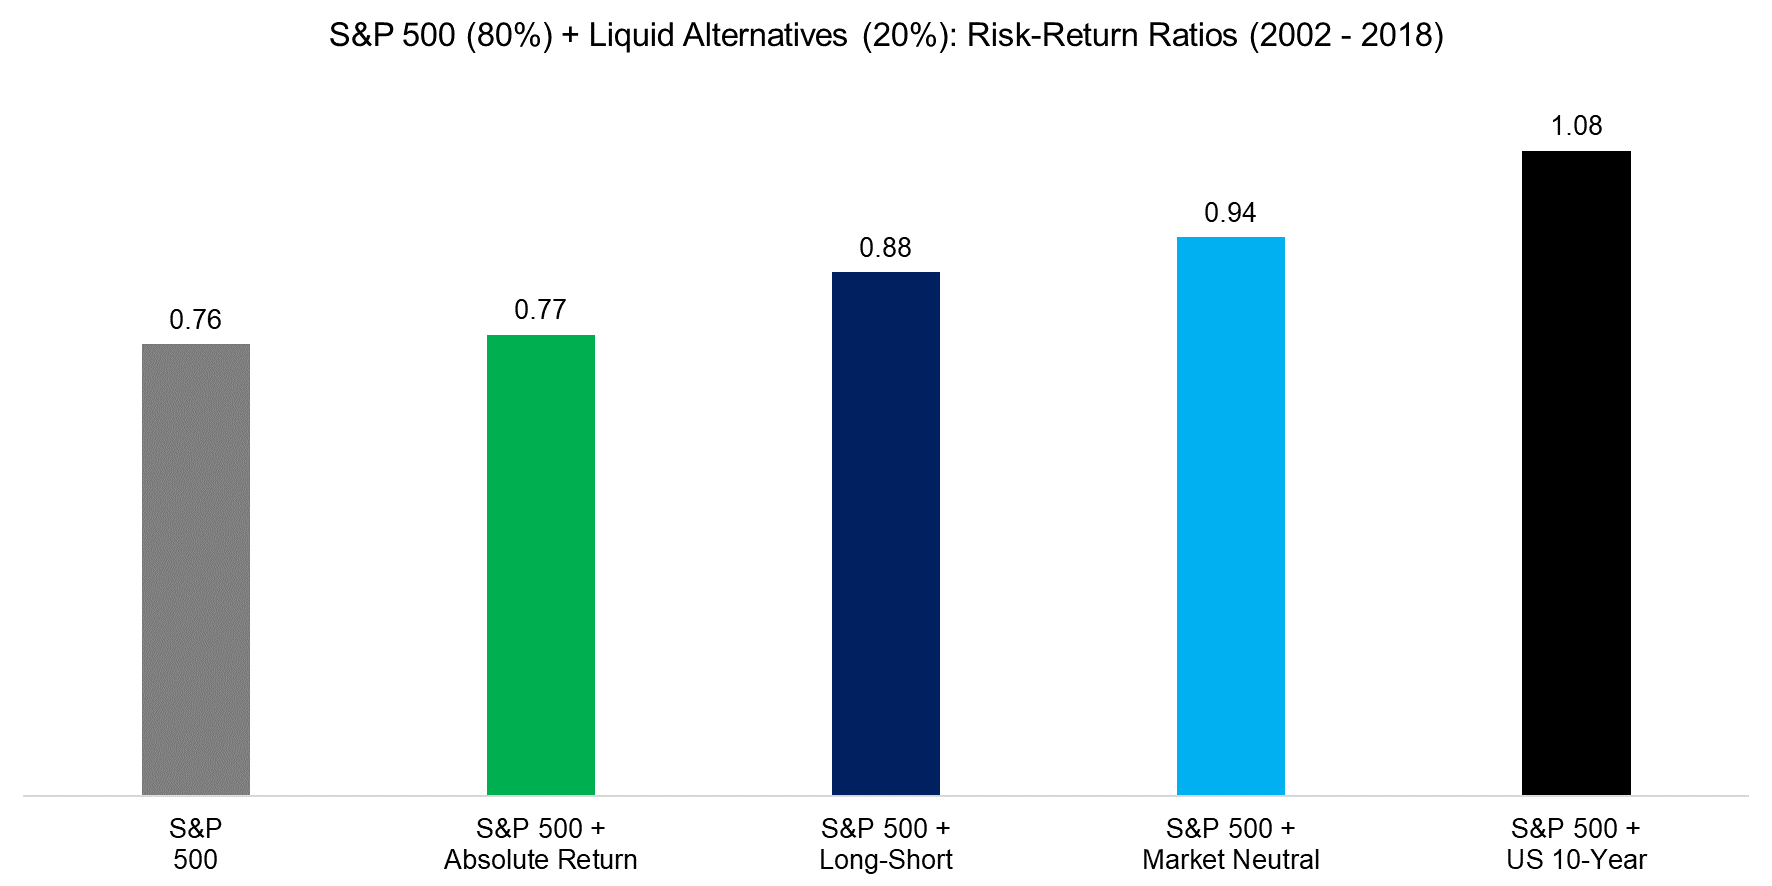 S&P 500 (80%) + Liquid Alternatives (20%) Risk-Return Ratios (2002 - 2018)